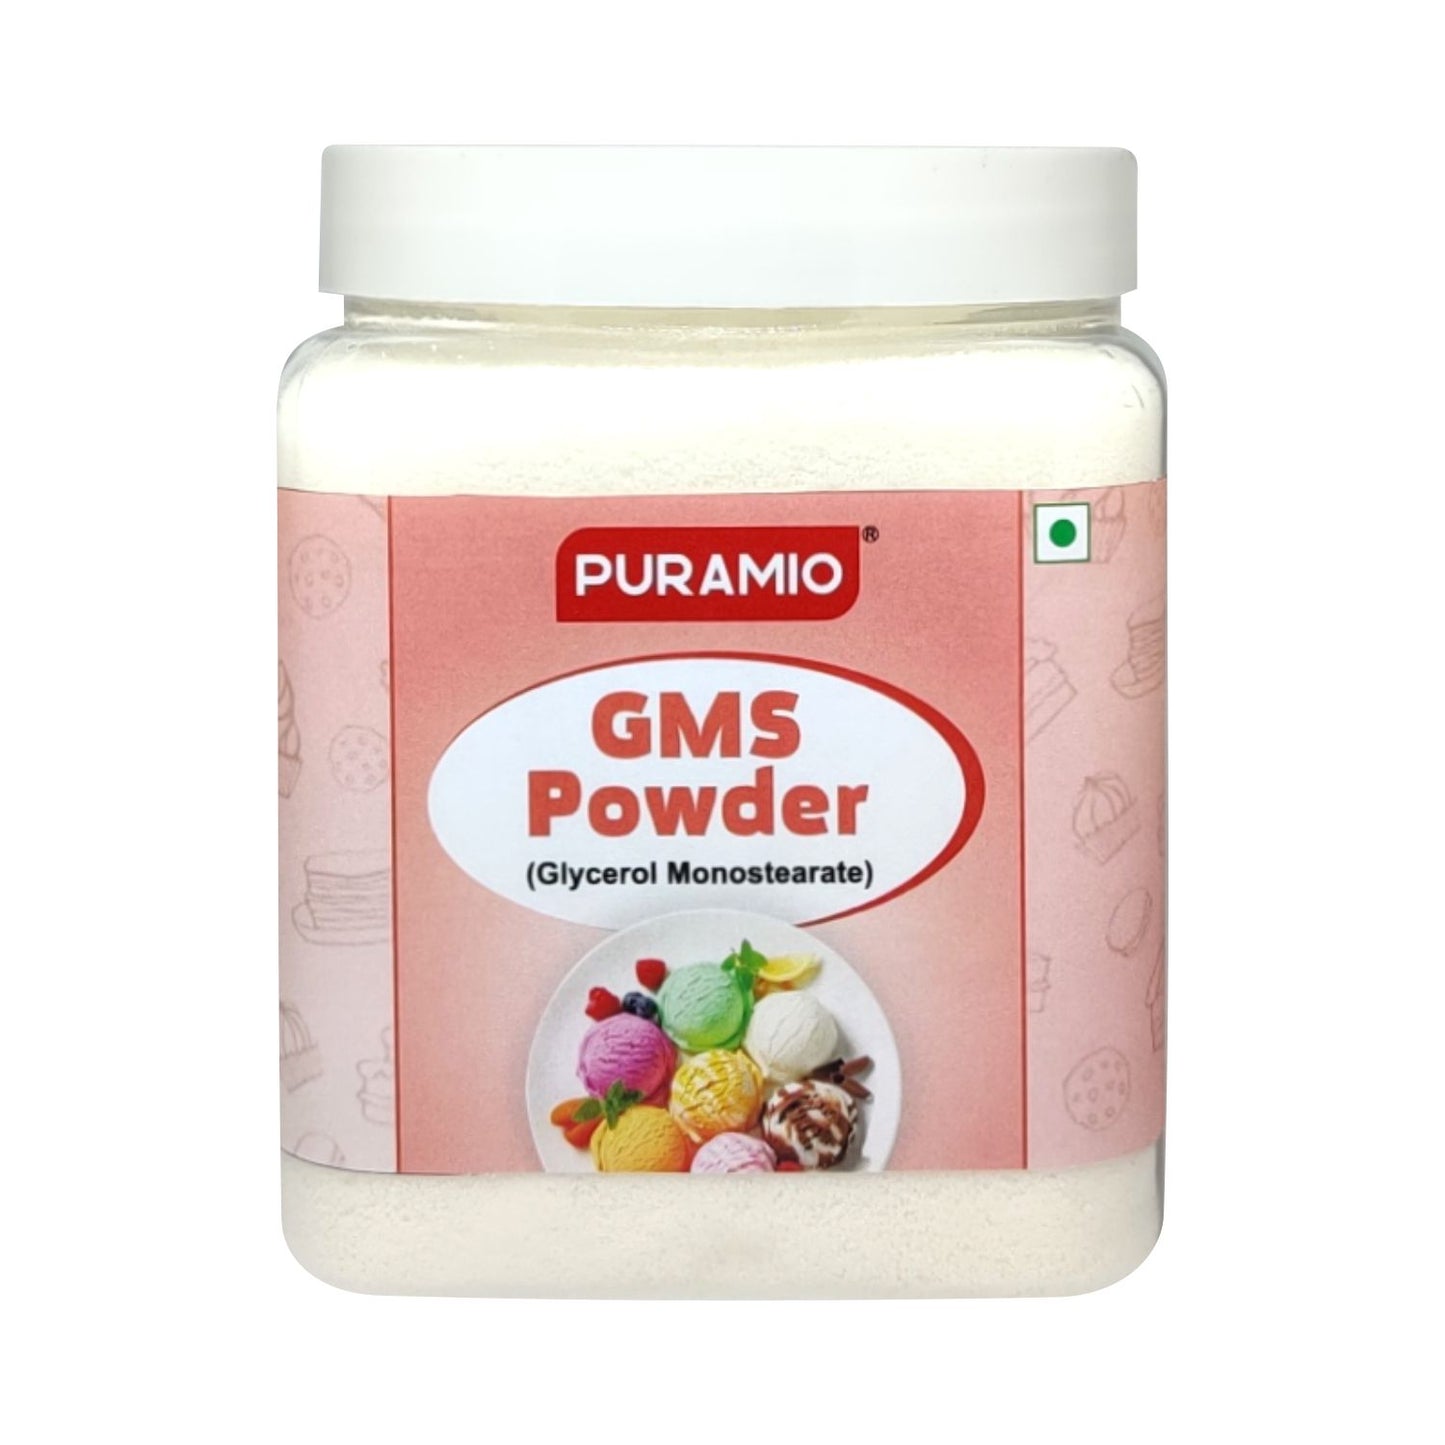 Puramio GMS Powder (Glycerol Monostearate)